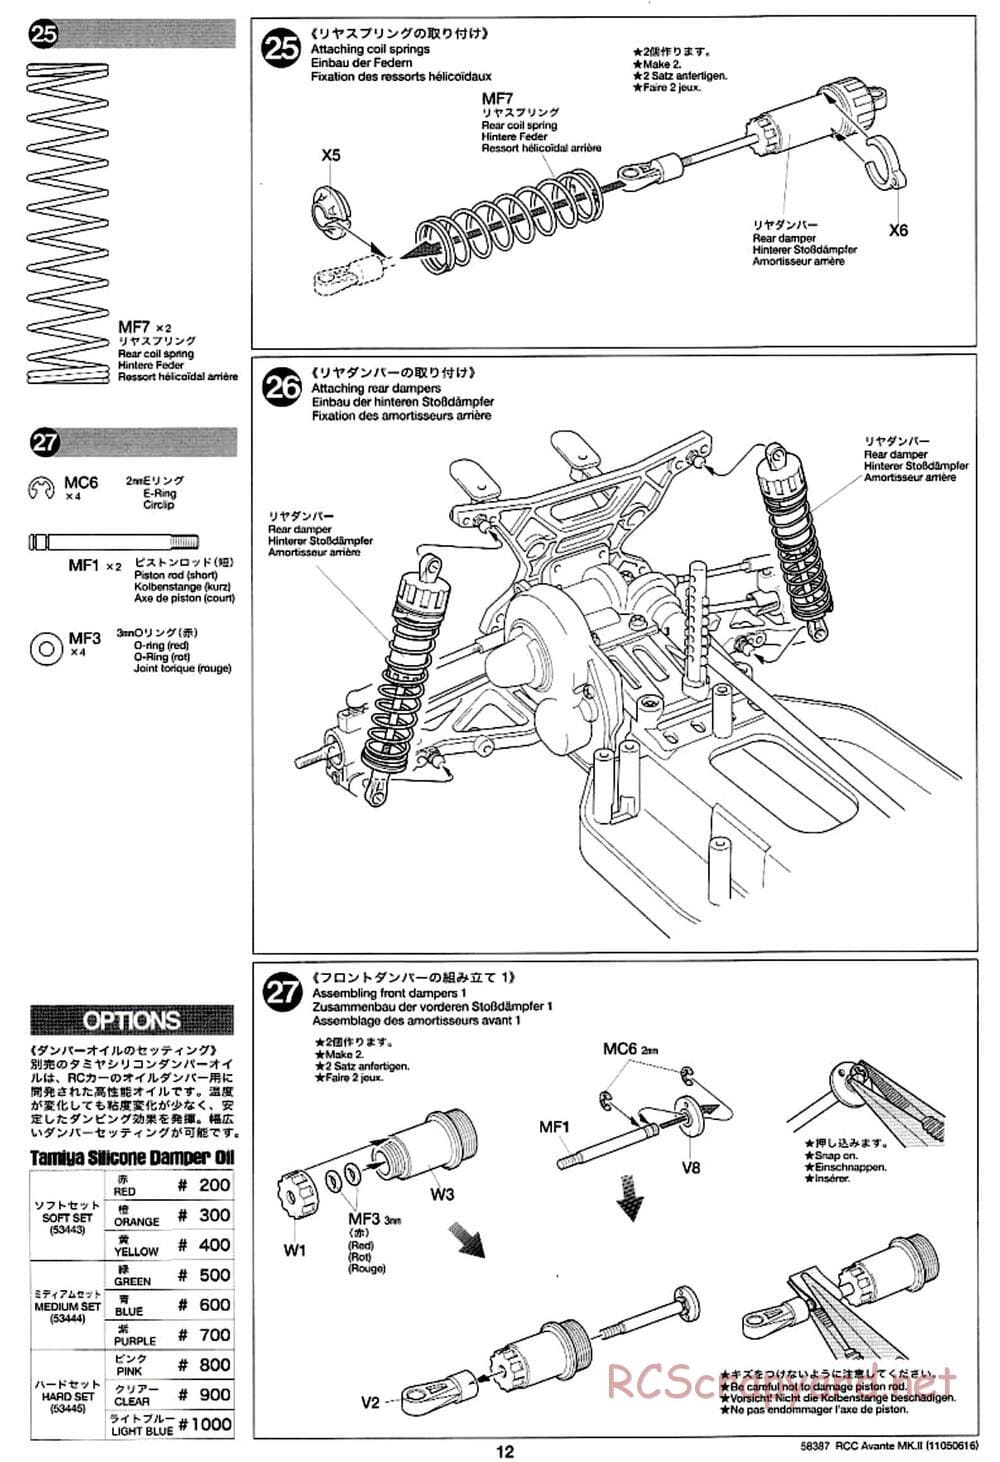 Tamiya - Avante Mk.II Chassis - Manual - Page 12